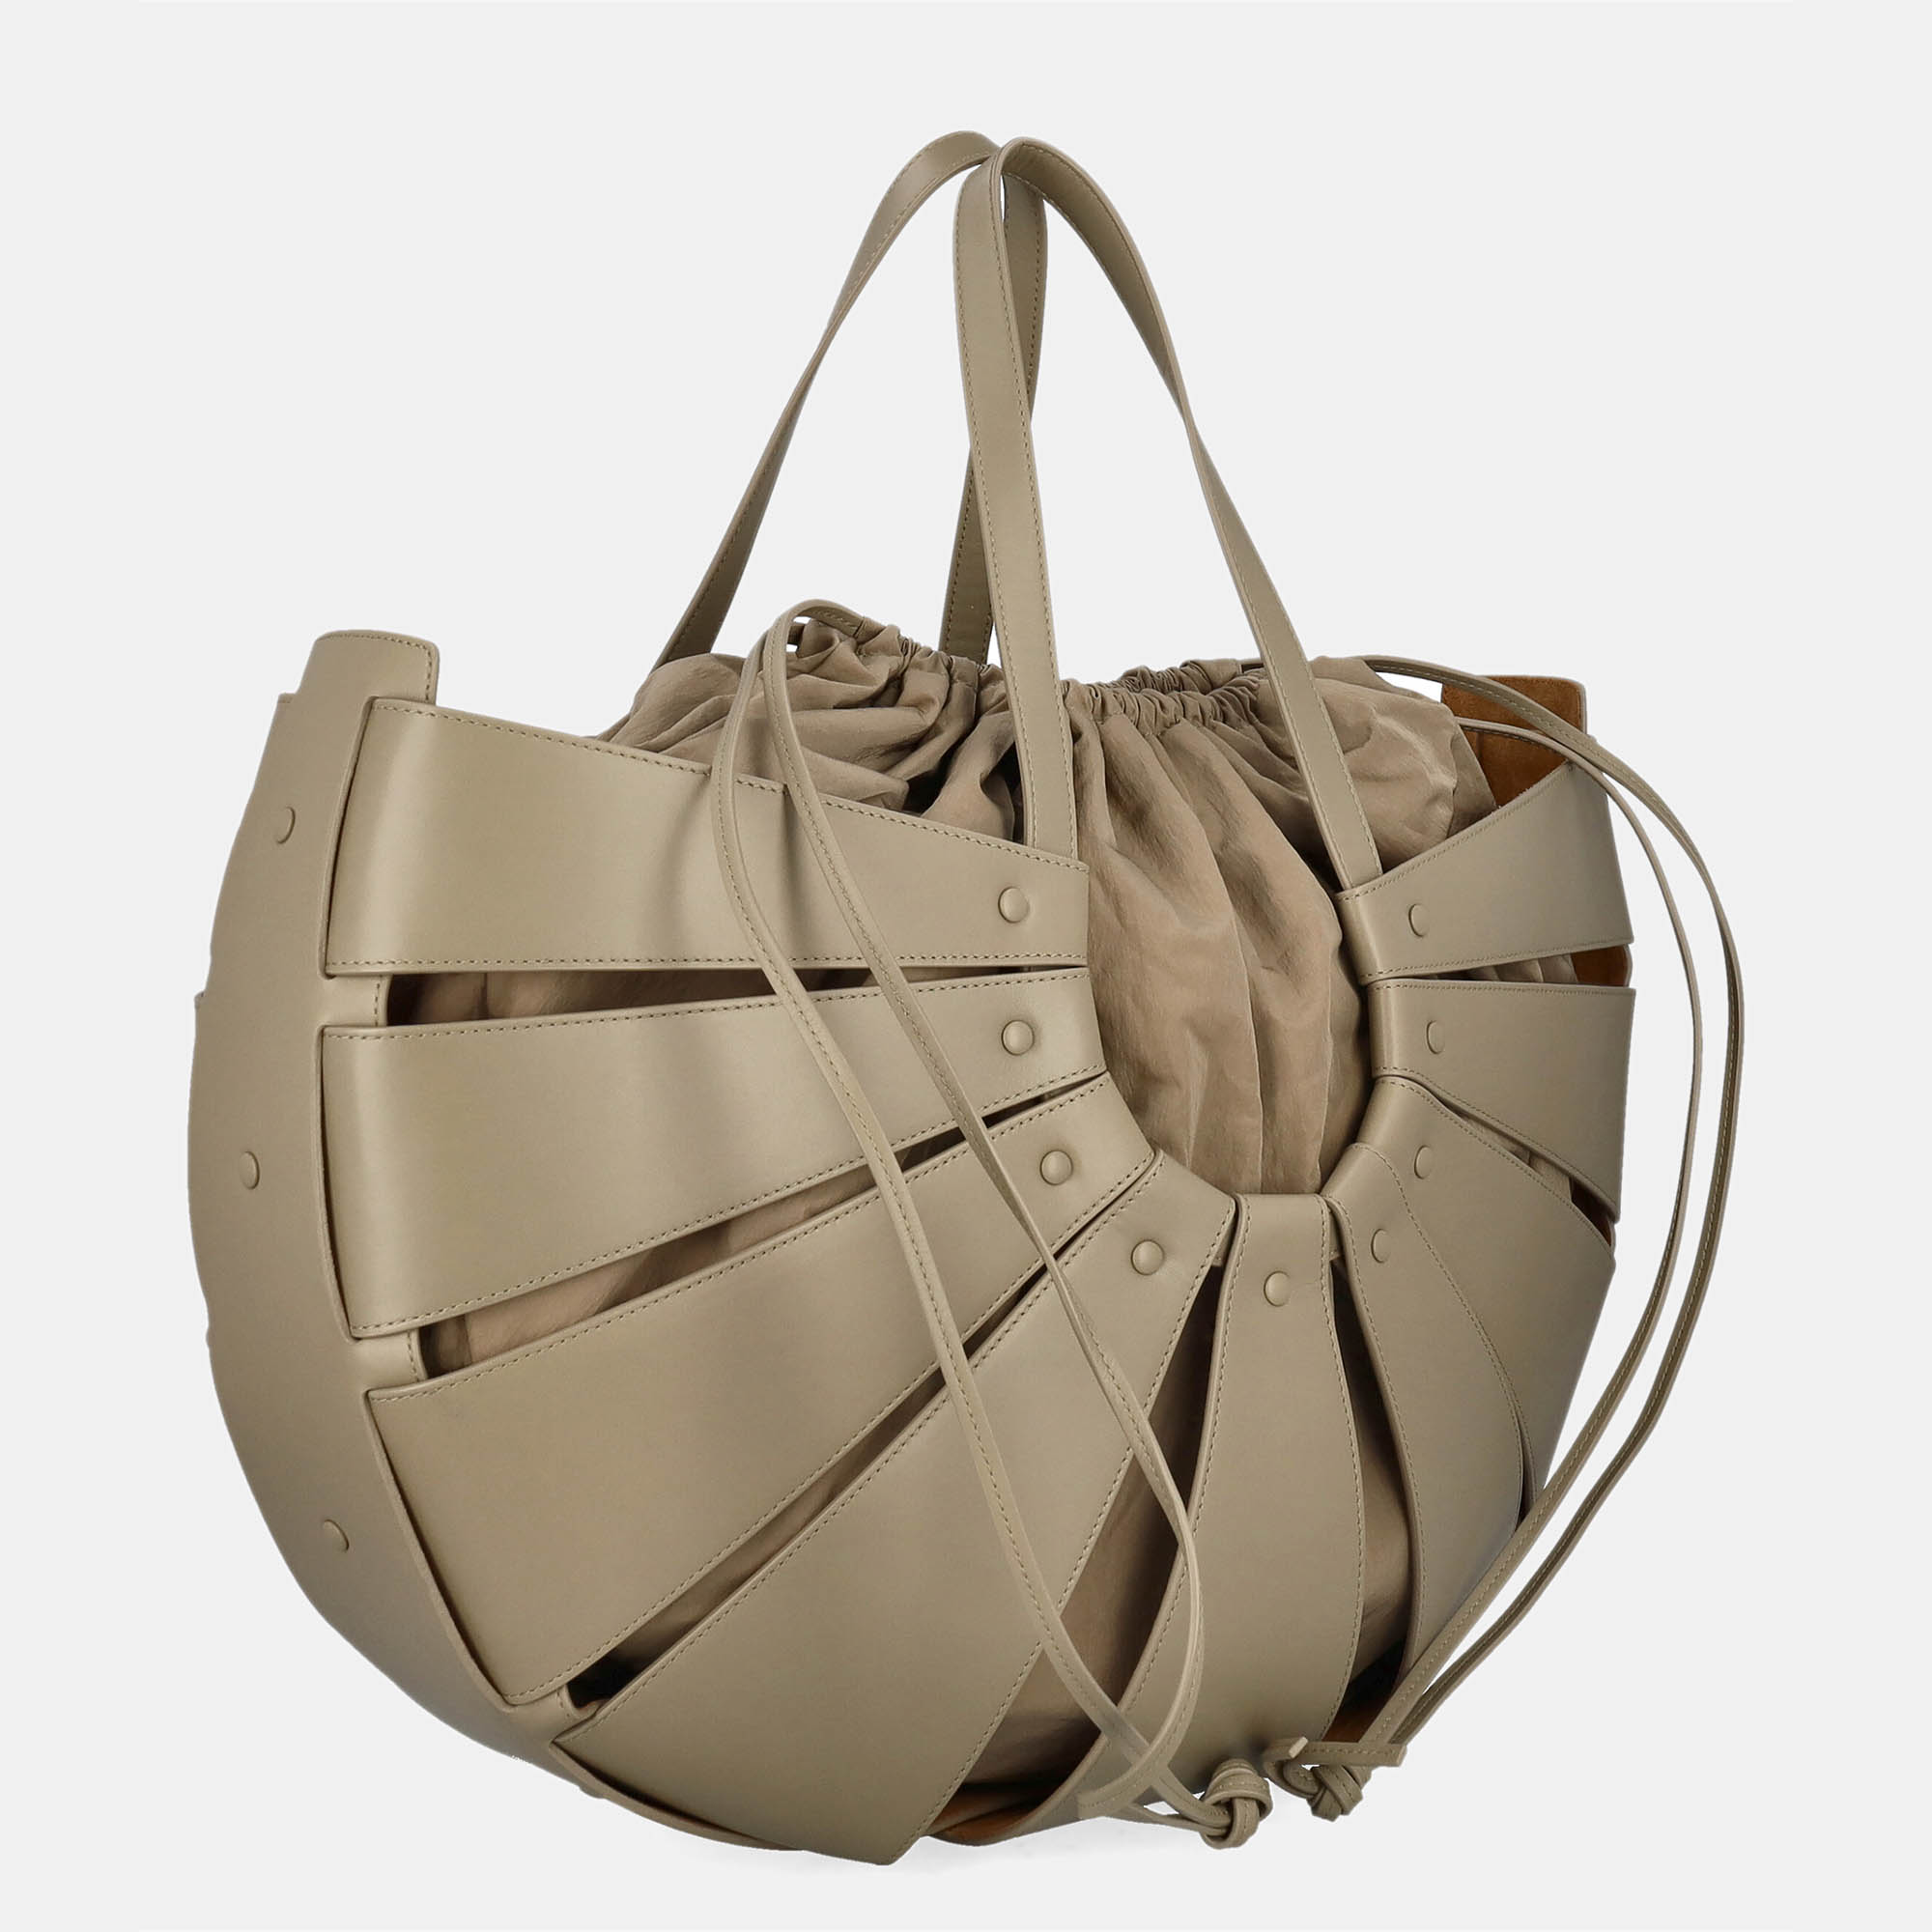 Bottega Veneta Women's Leather Tote Bag - Grey - One Size